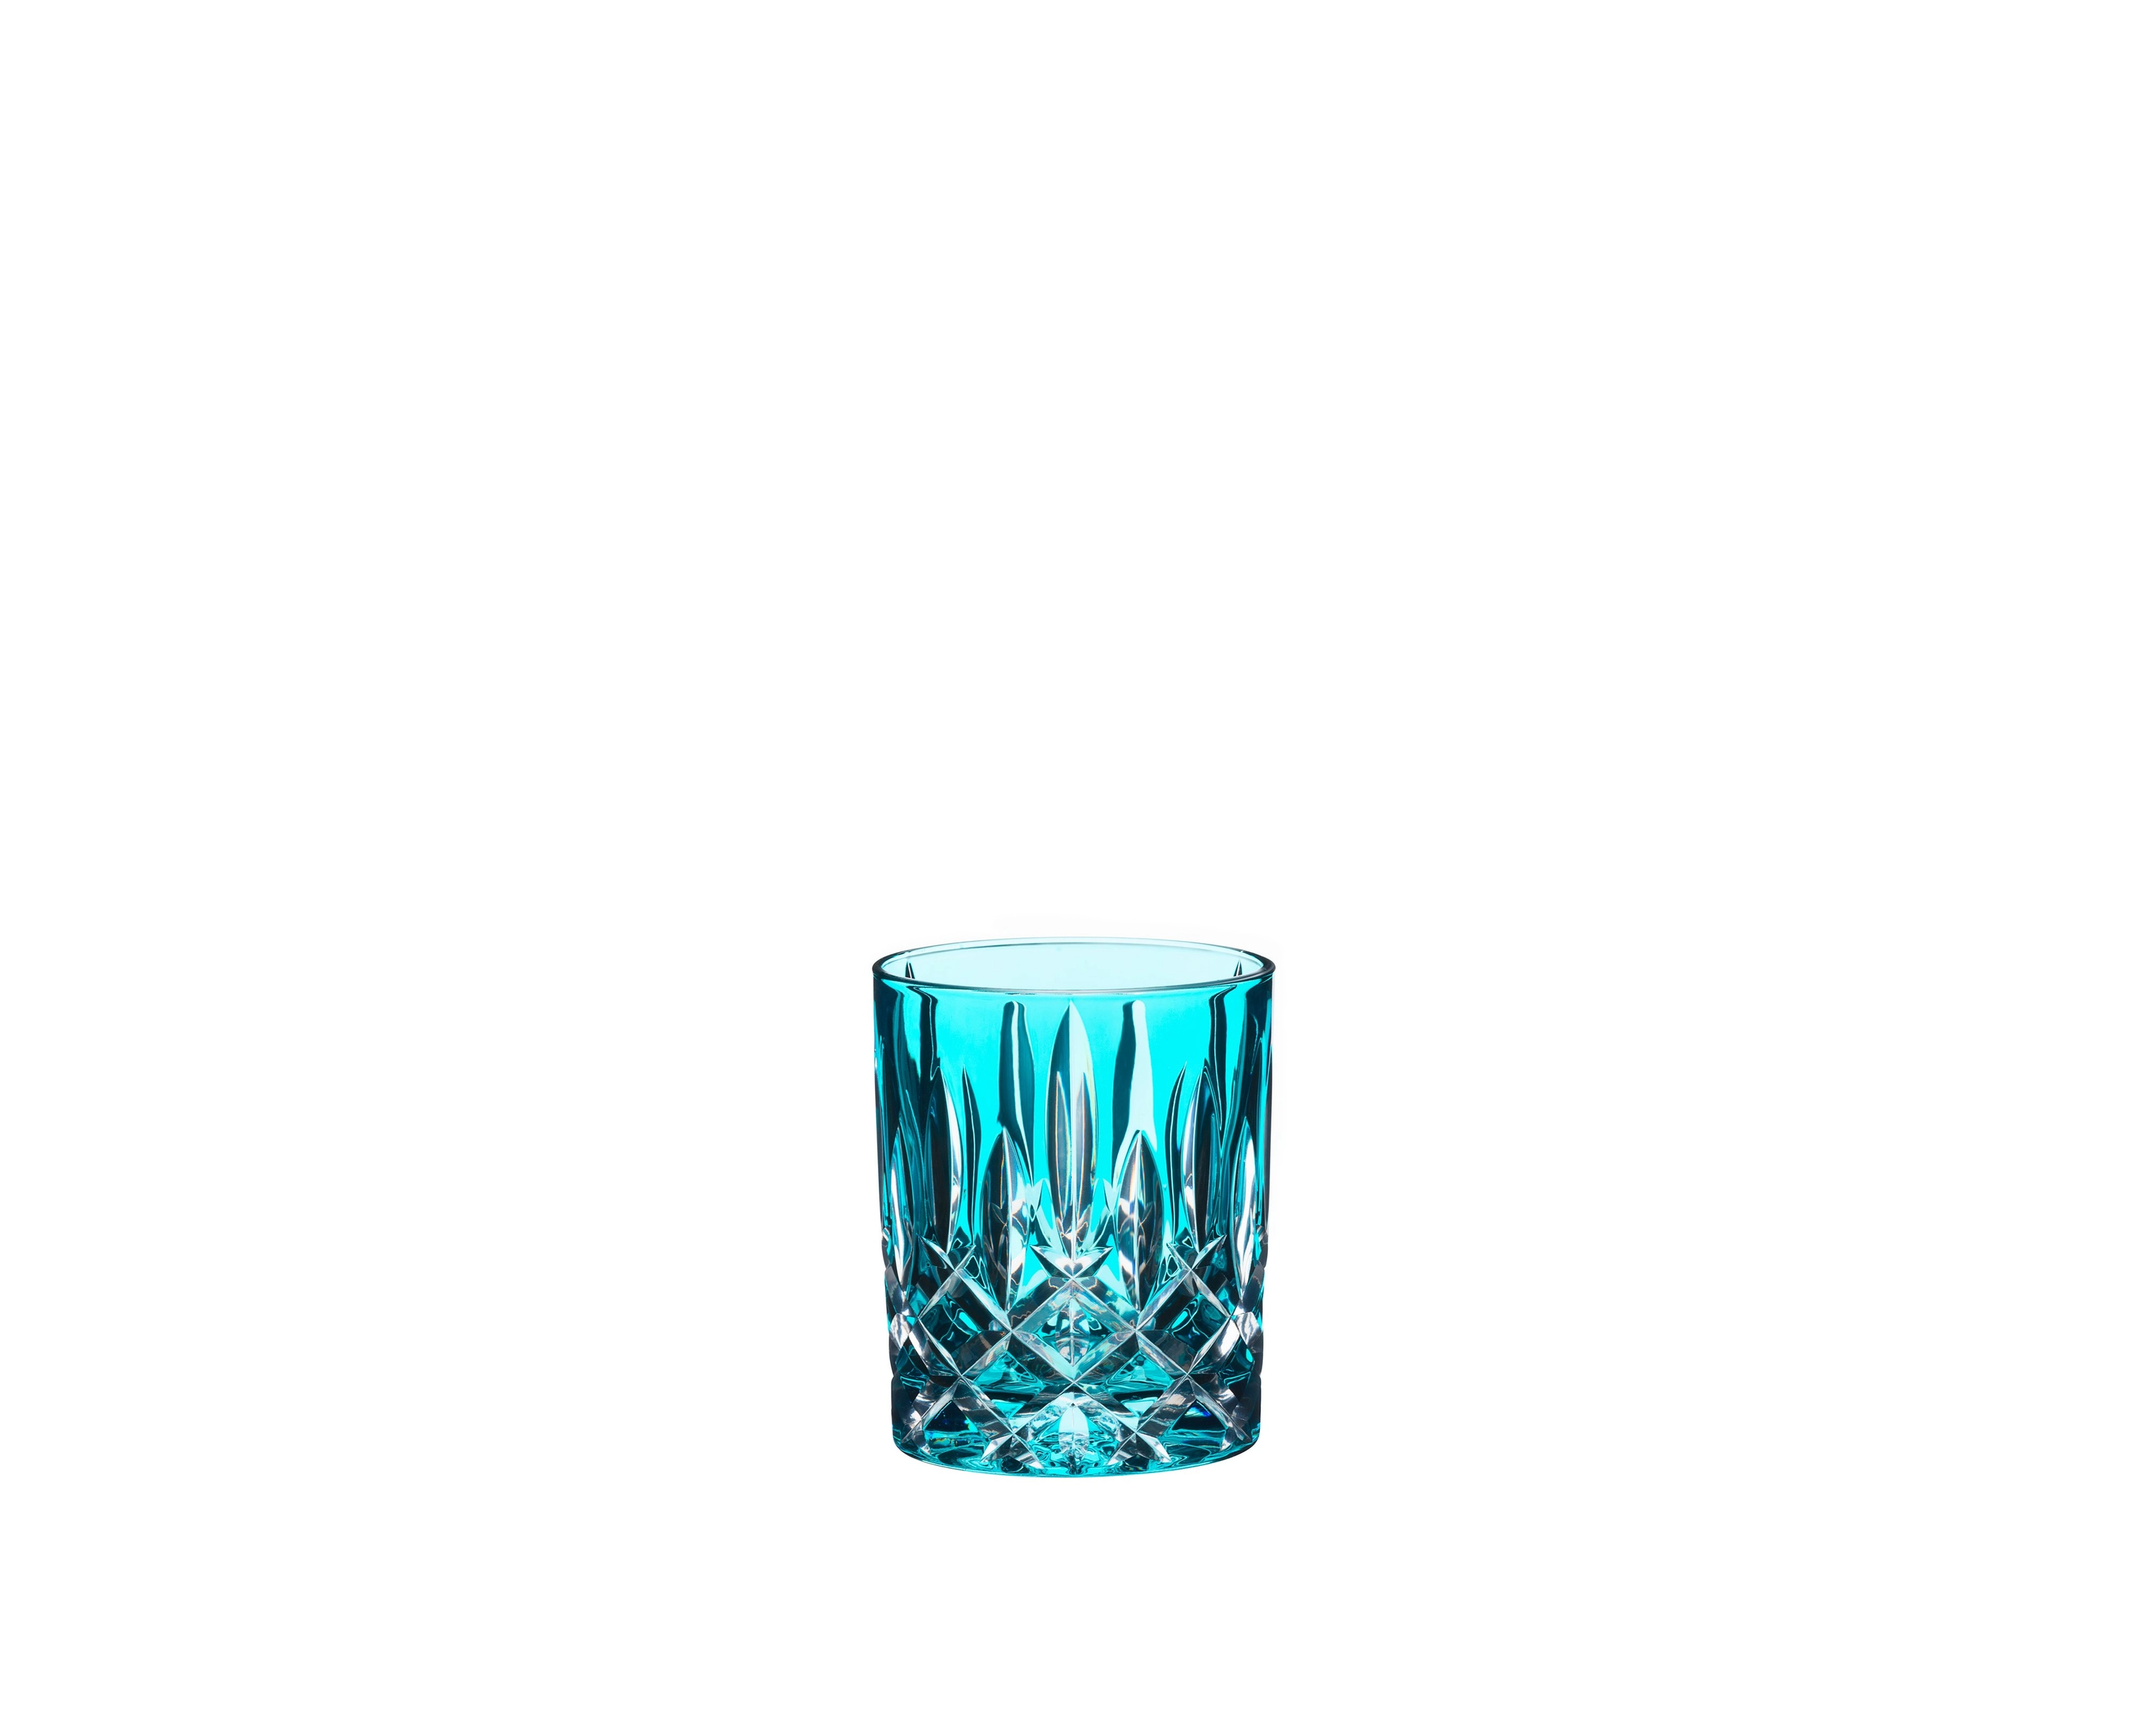 Riedel Laudon Tumbler Turquoise, set of 4 pieces